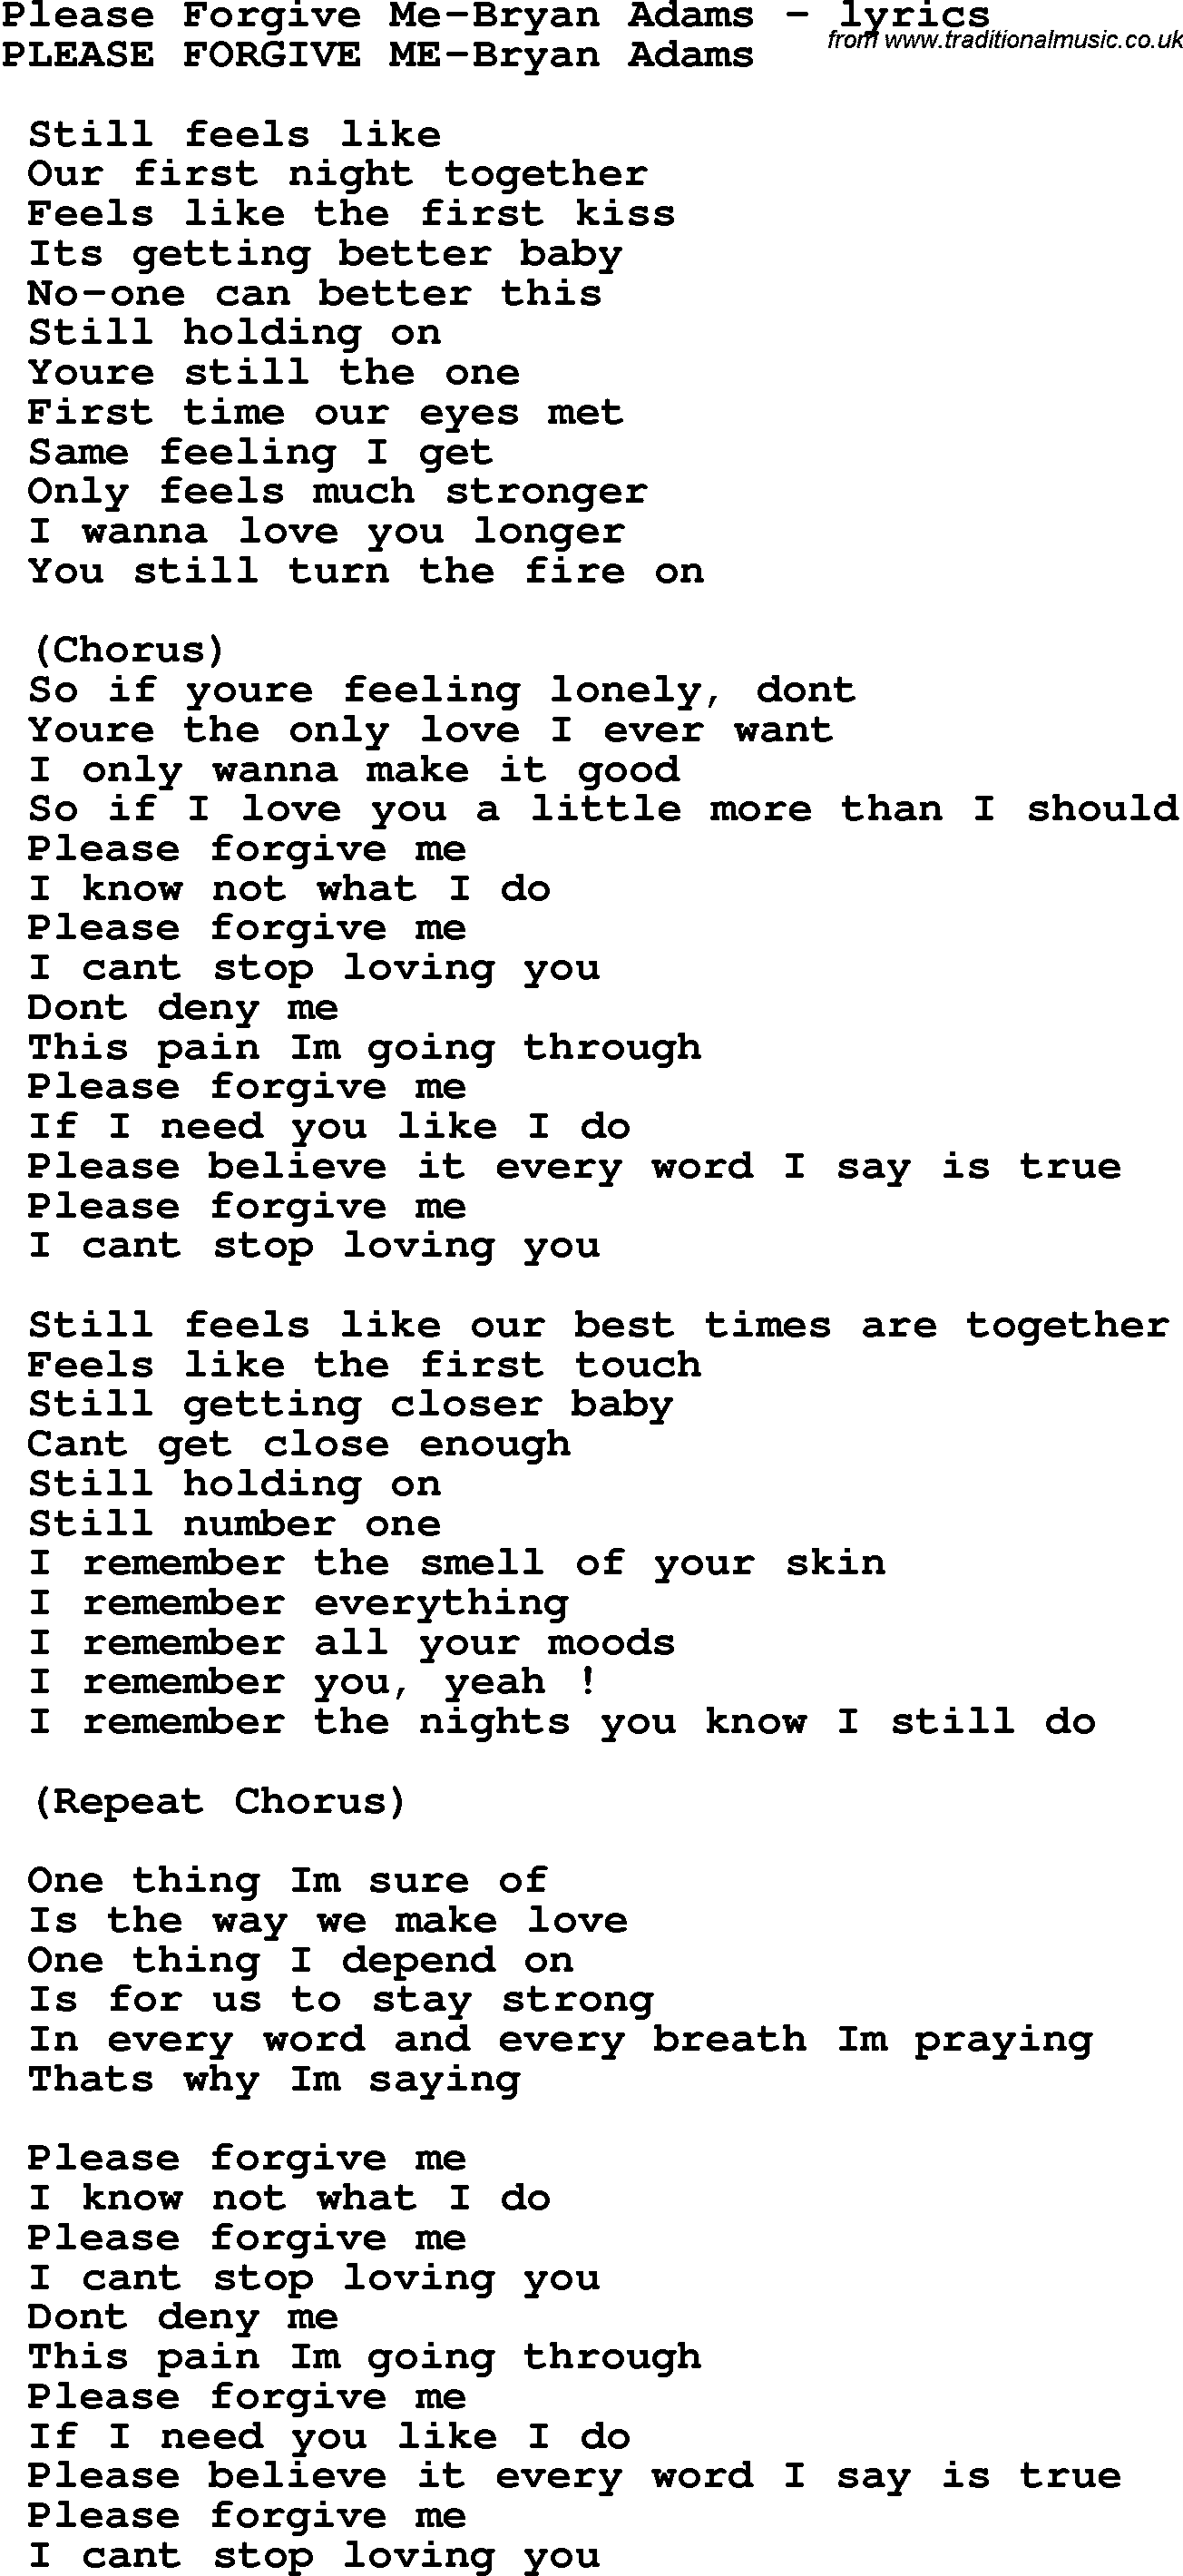 Love Song Lyrics for: Please Forgive Me-Bryan Adams